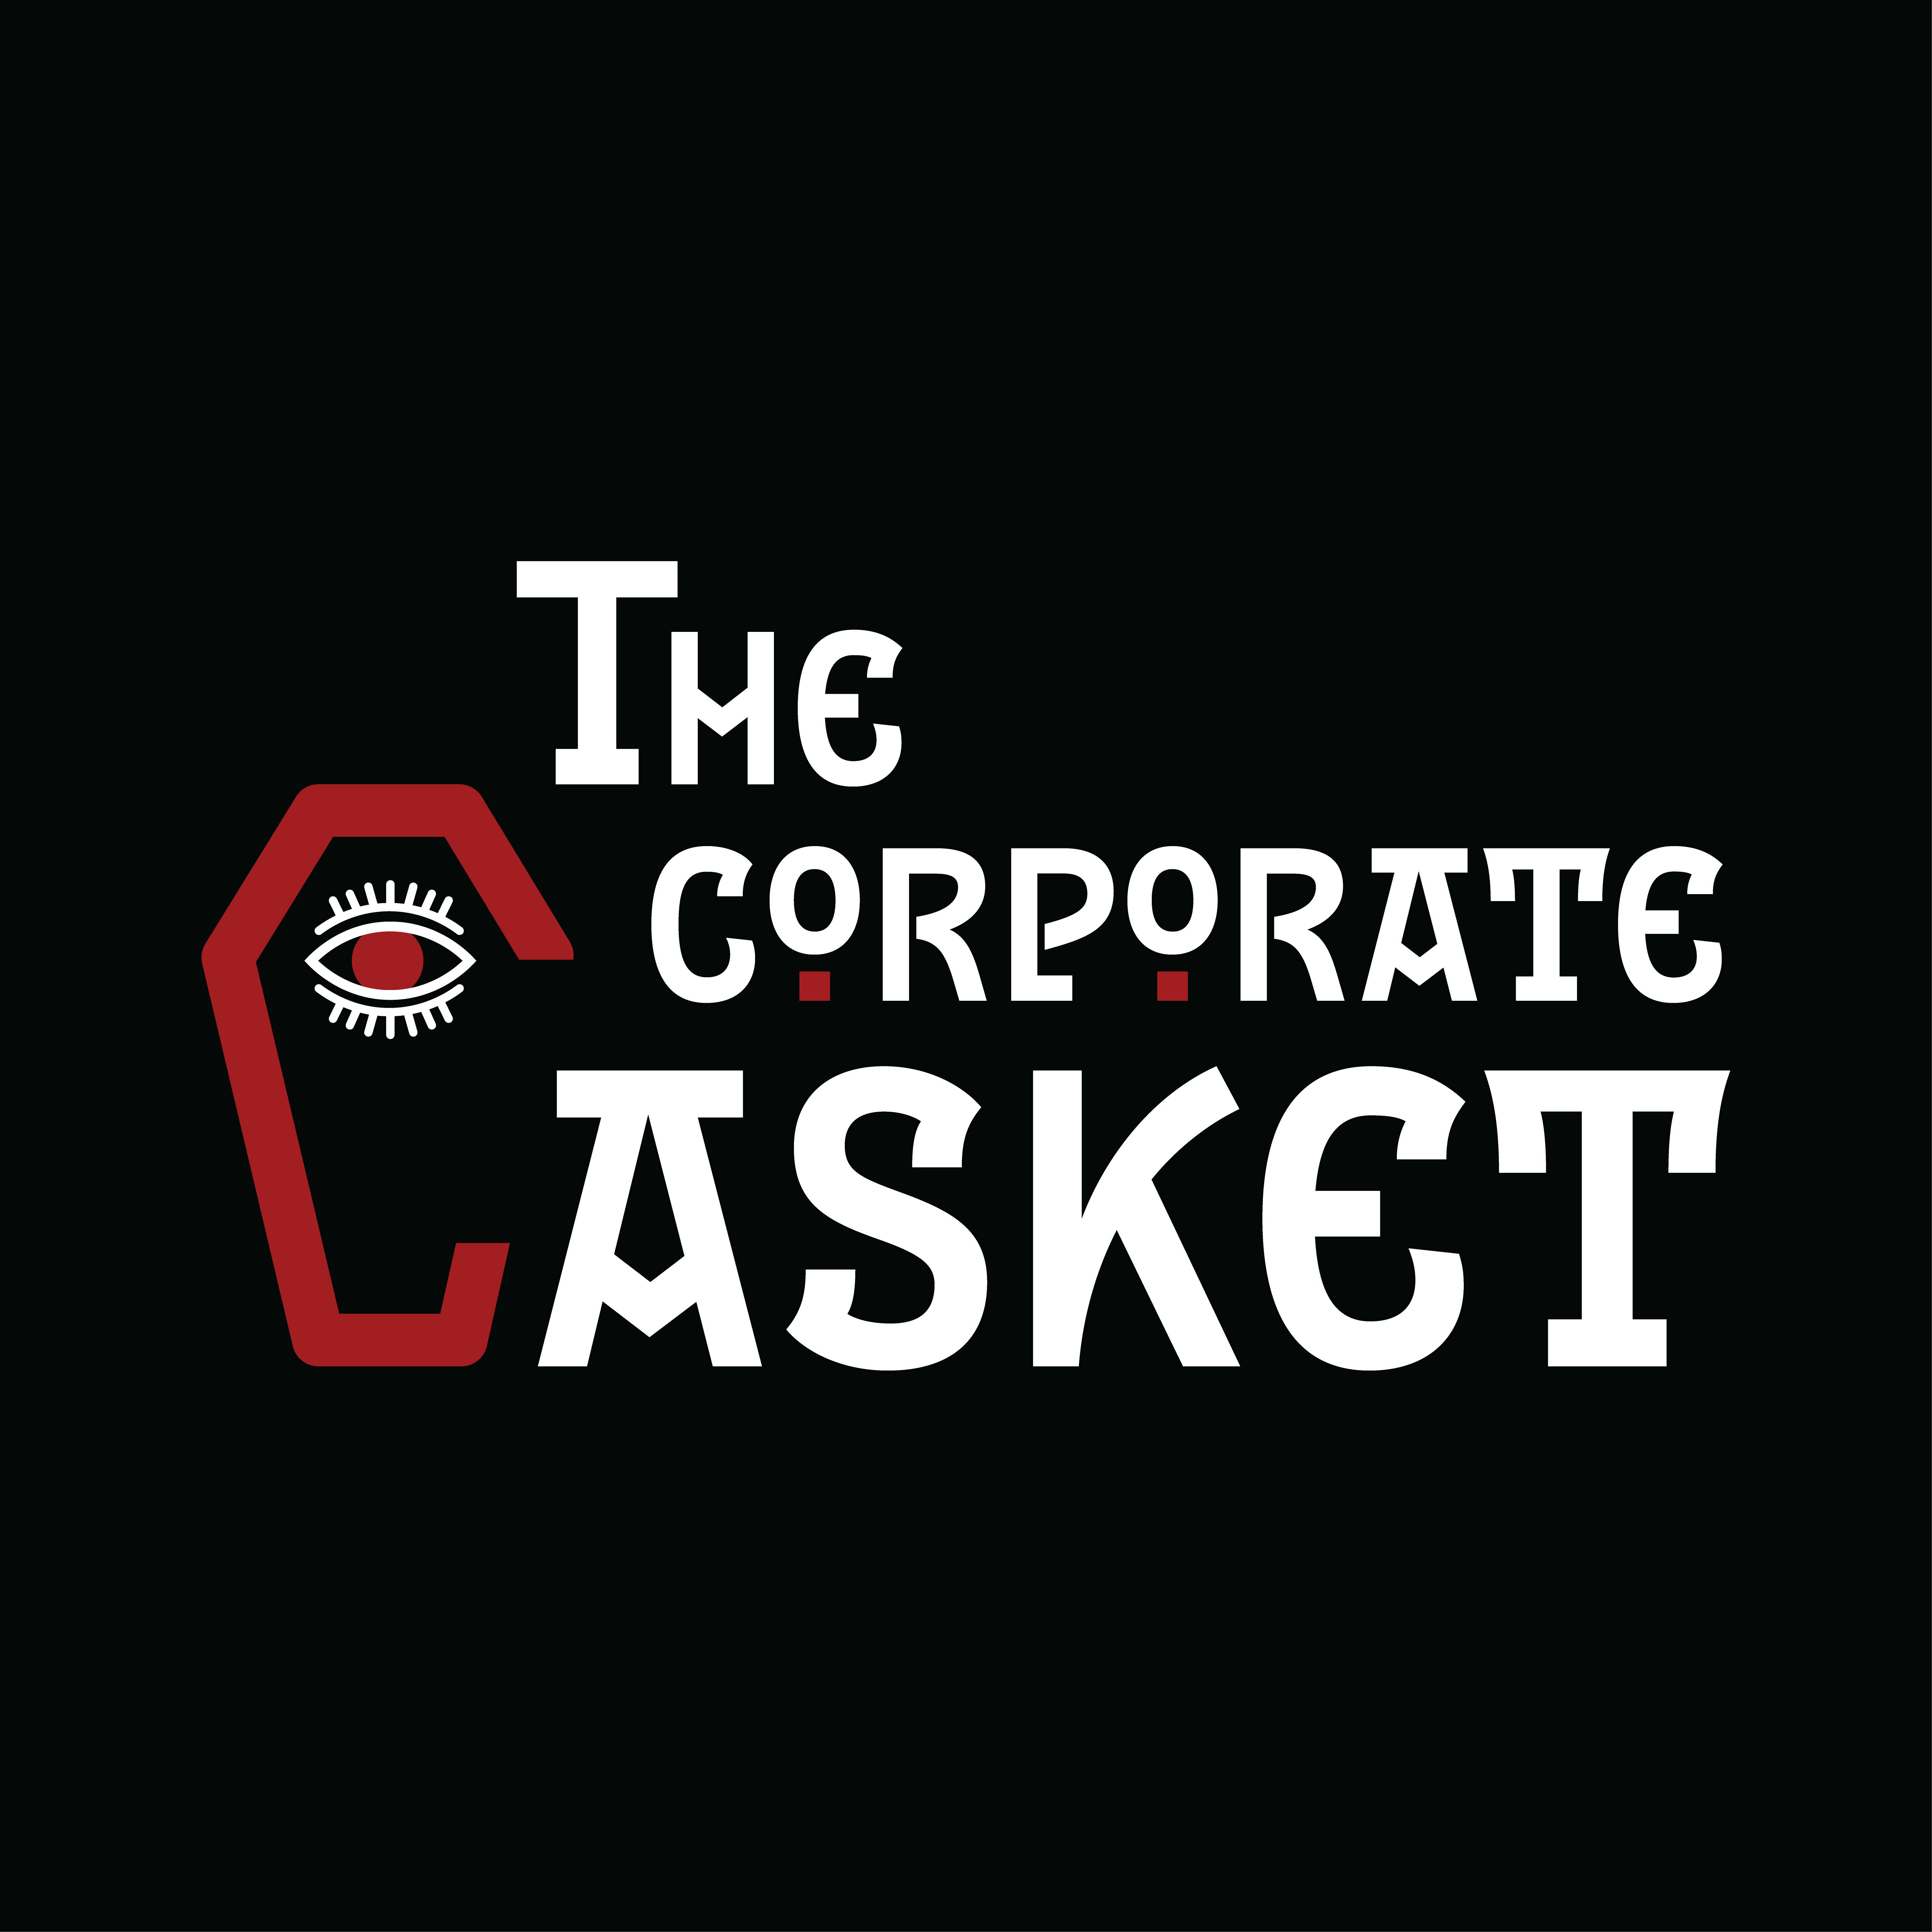 The Most Dangerous Creature In Seaworld: The Corporation | Corporate Casket